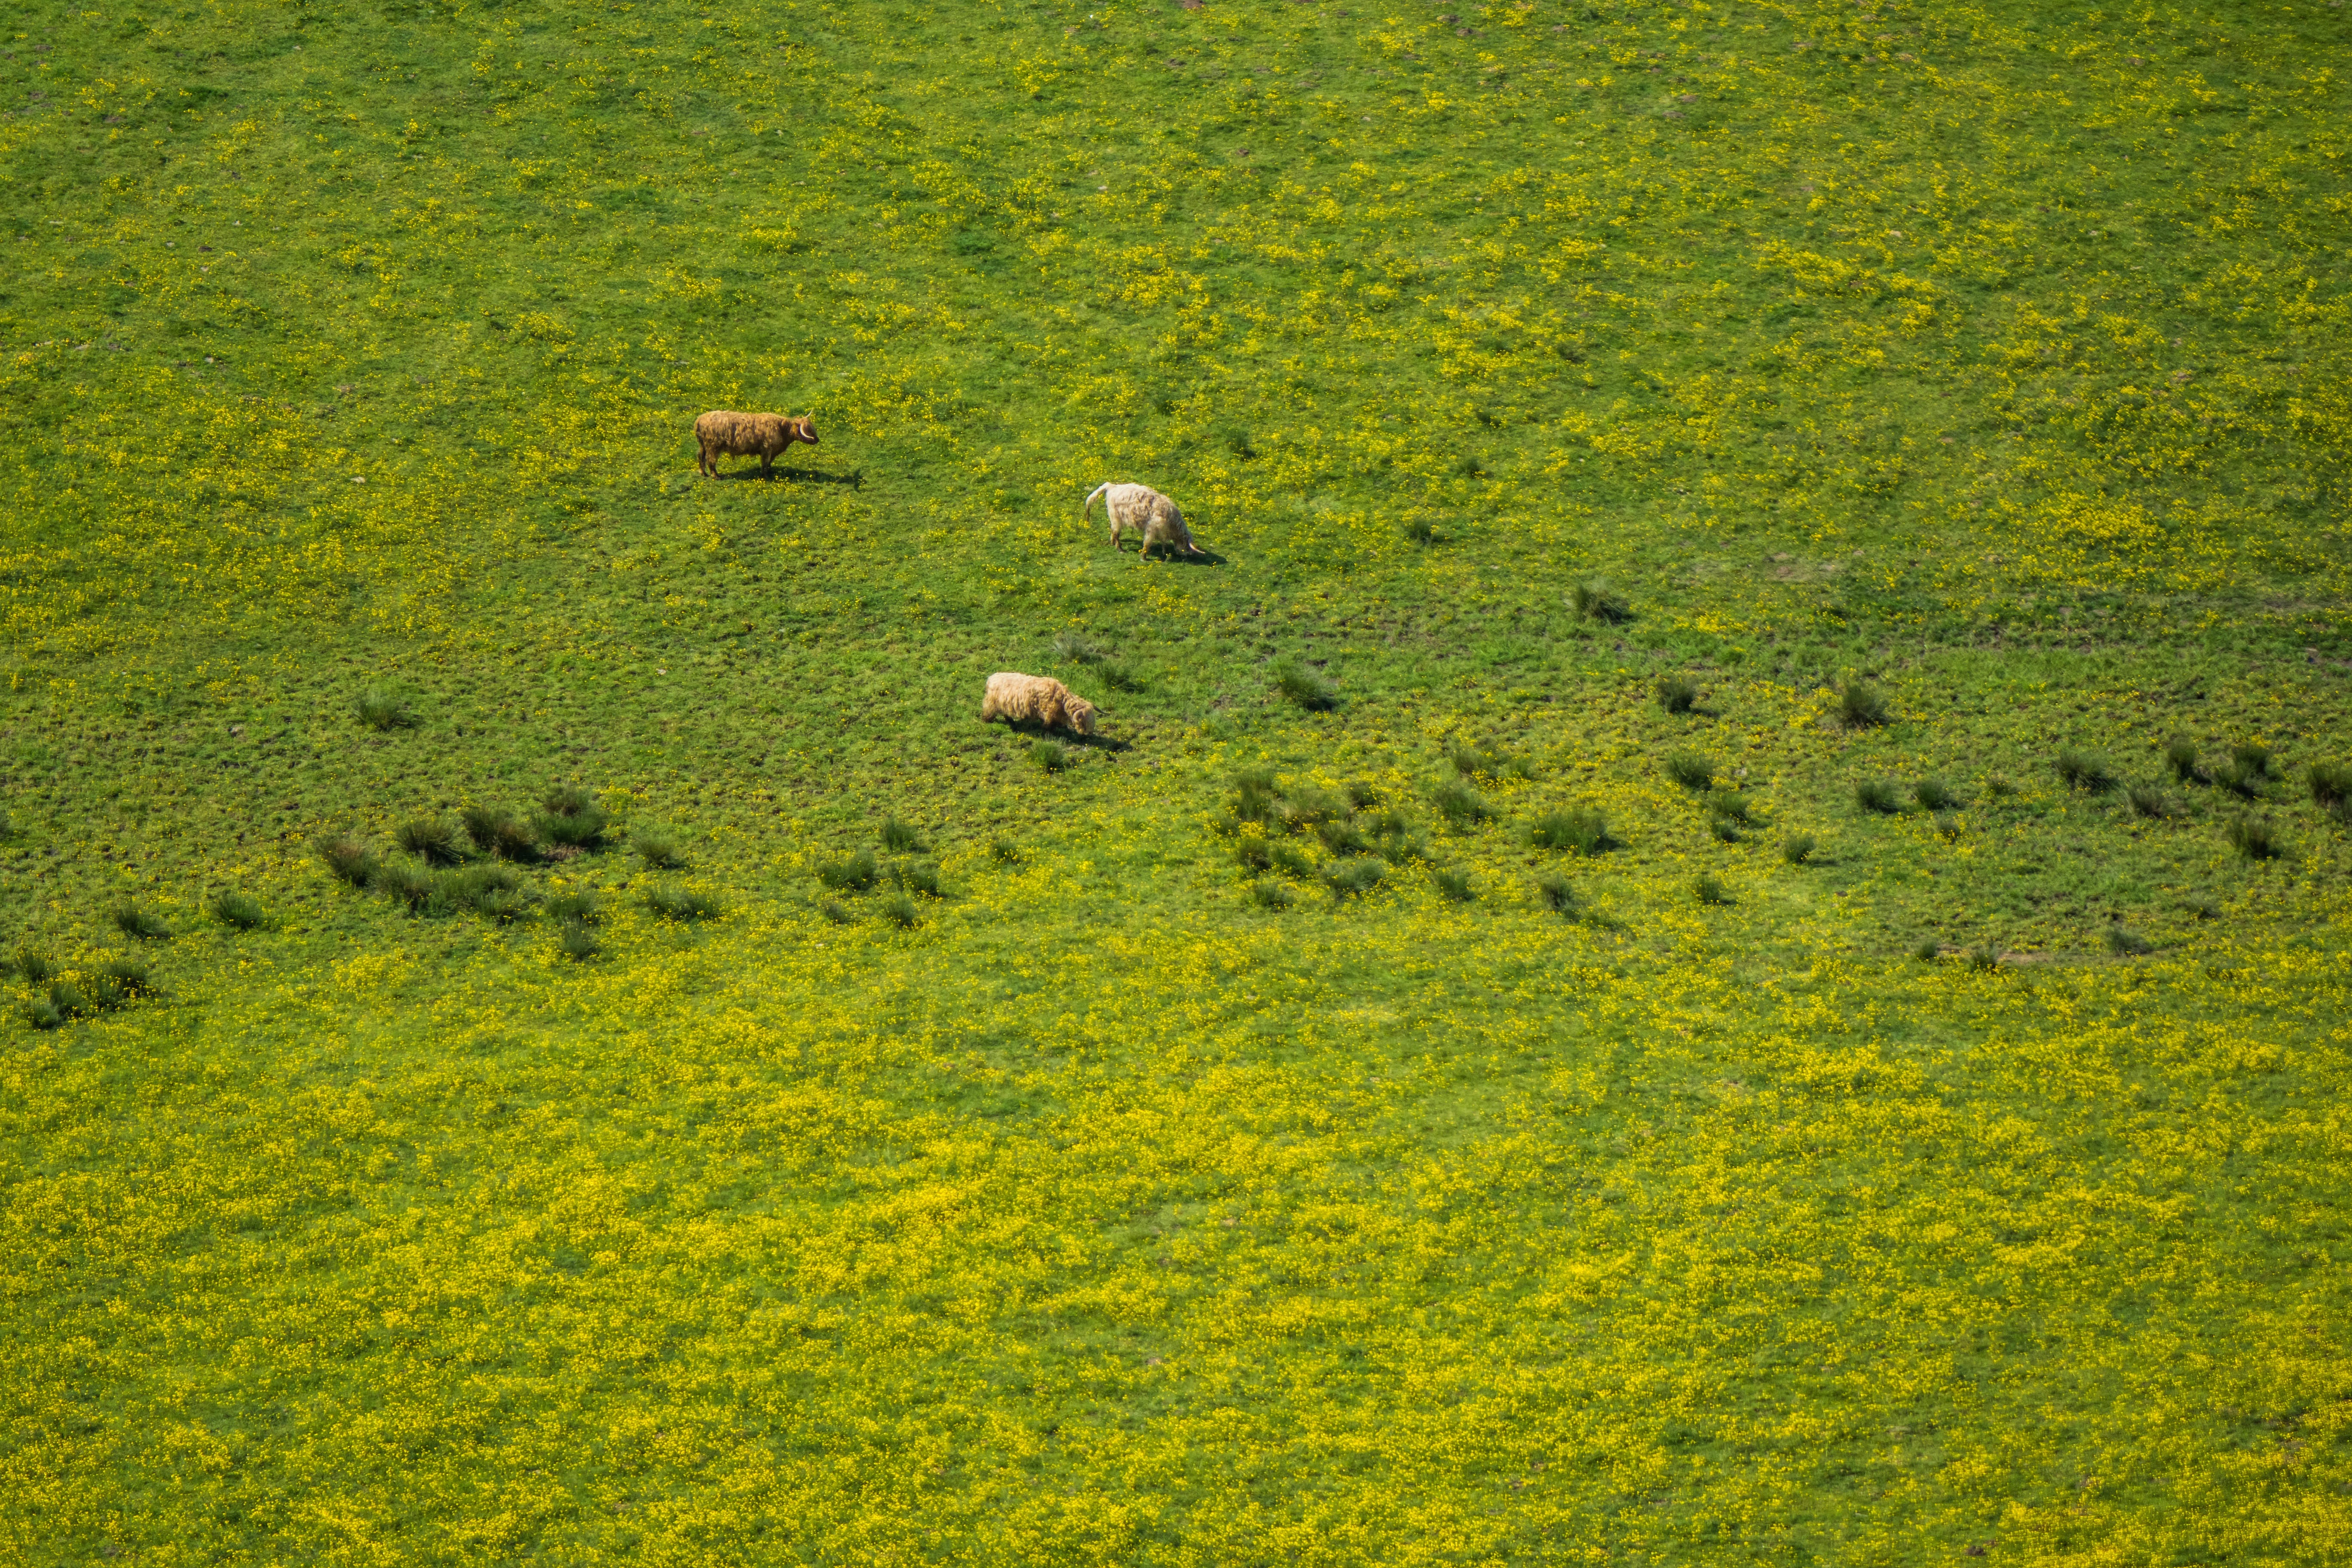 Livestock on a green pasture